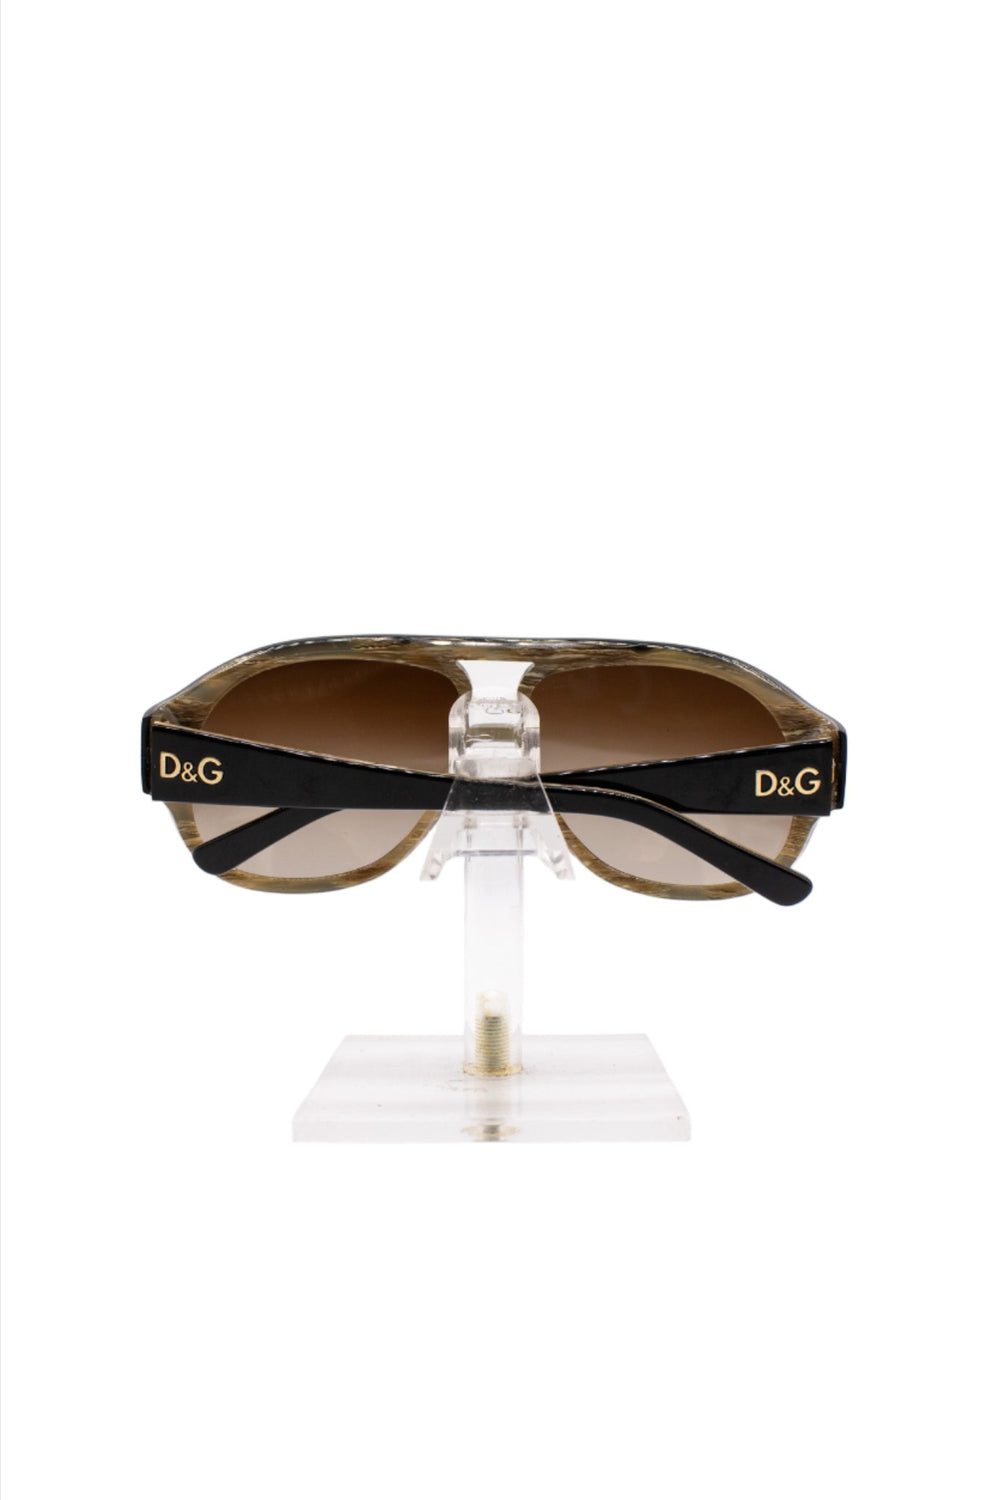 Dolce & Gabbana Brown Sunglasses w/ Brown Gradient Lens - Mens Unisex